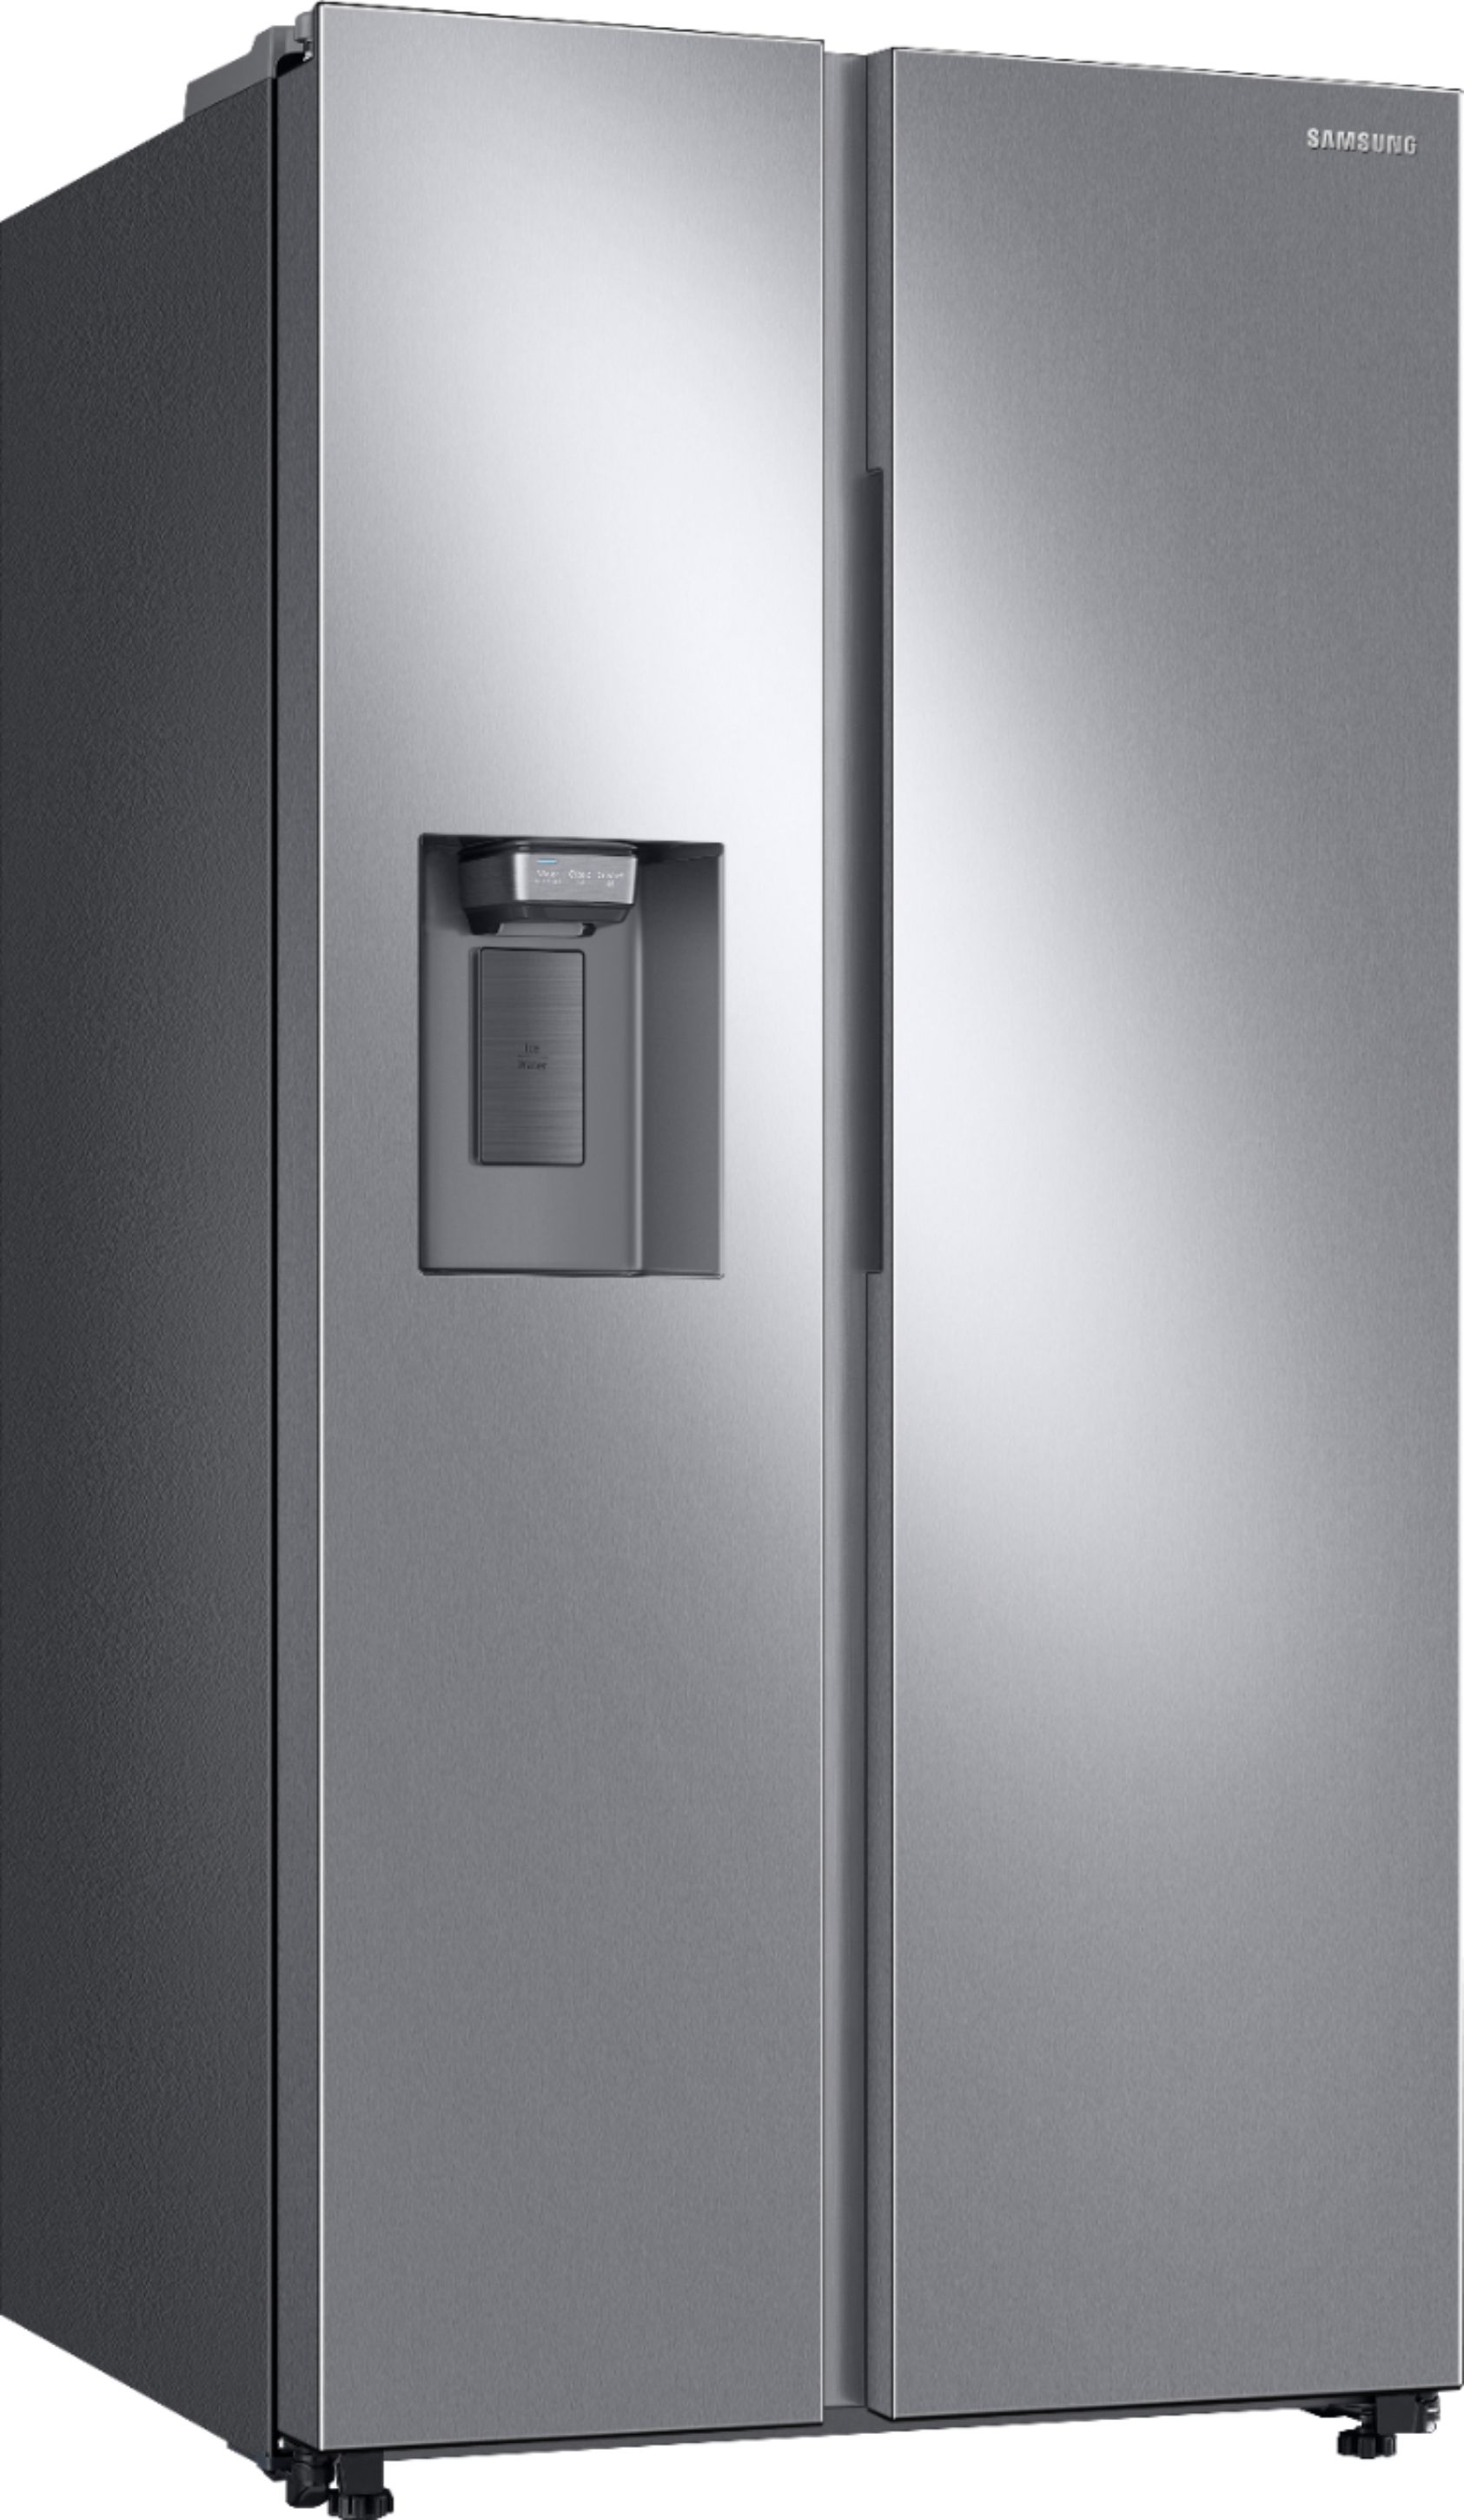 Angle View: Samsung - Bespoke 11.4 cu. ft. Flex Column refrigerator - White glass